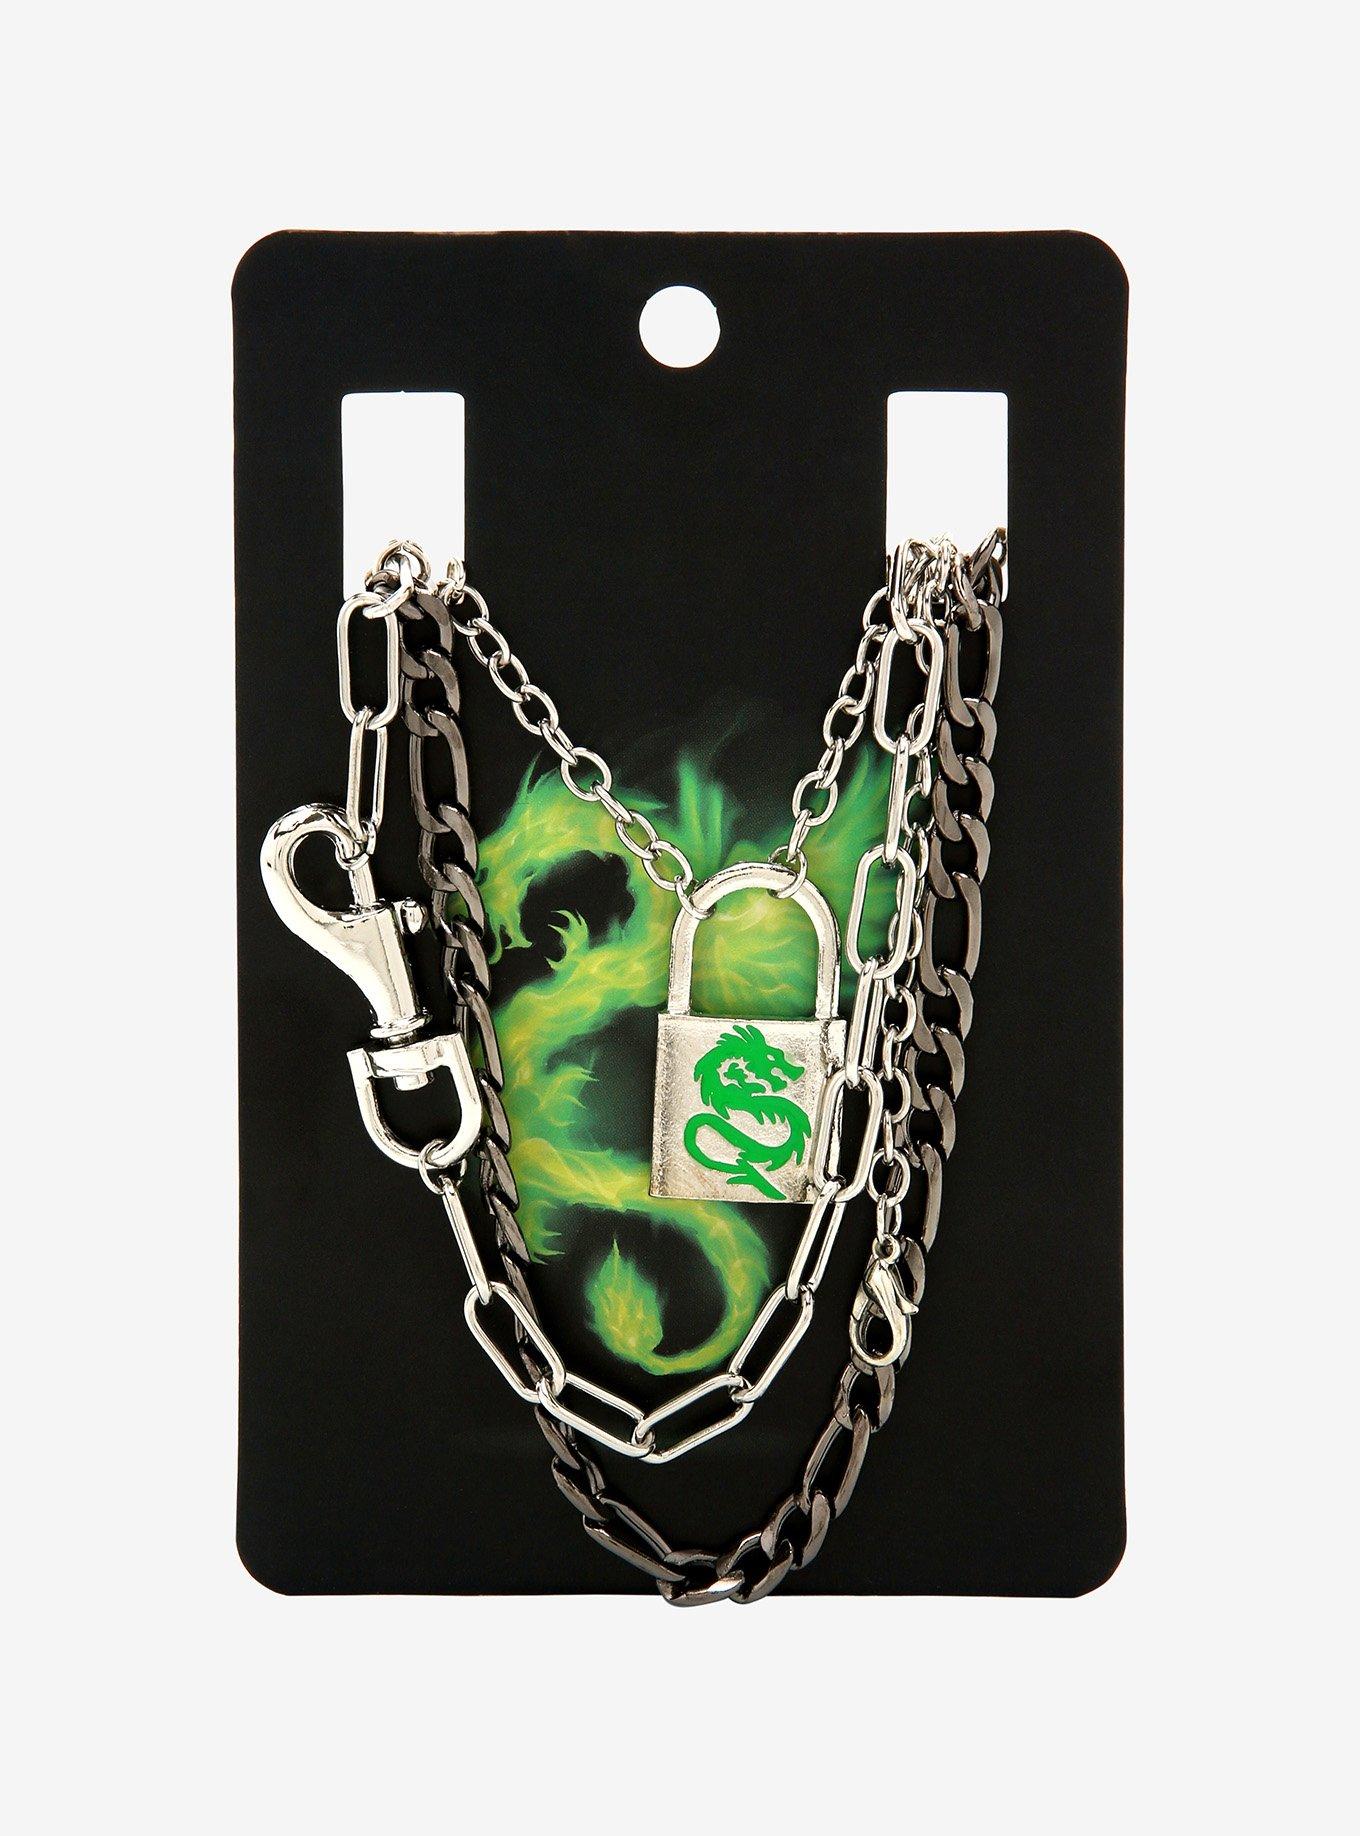 Green Dragon Padlock Chain Necklace Set, , alternate